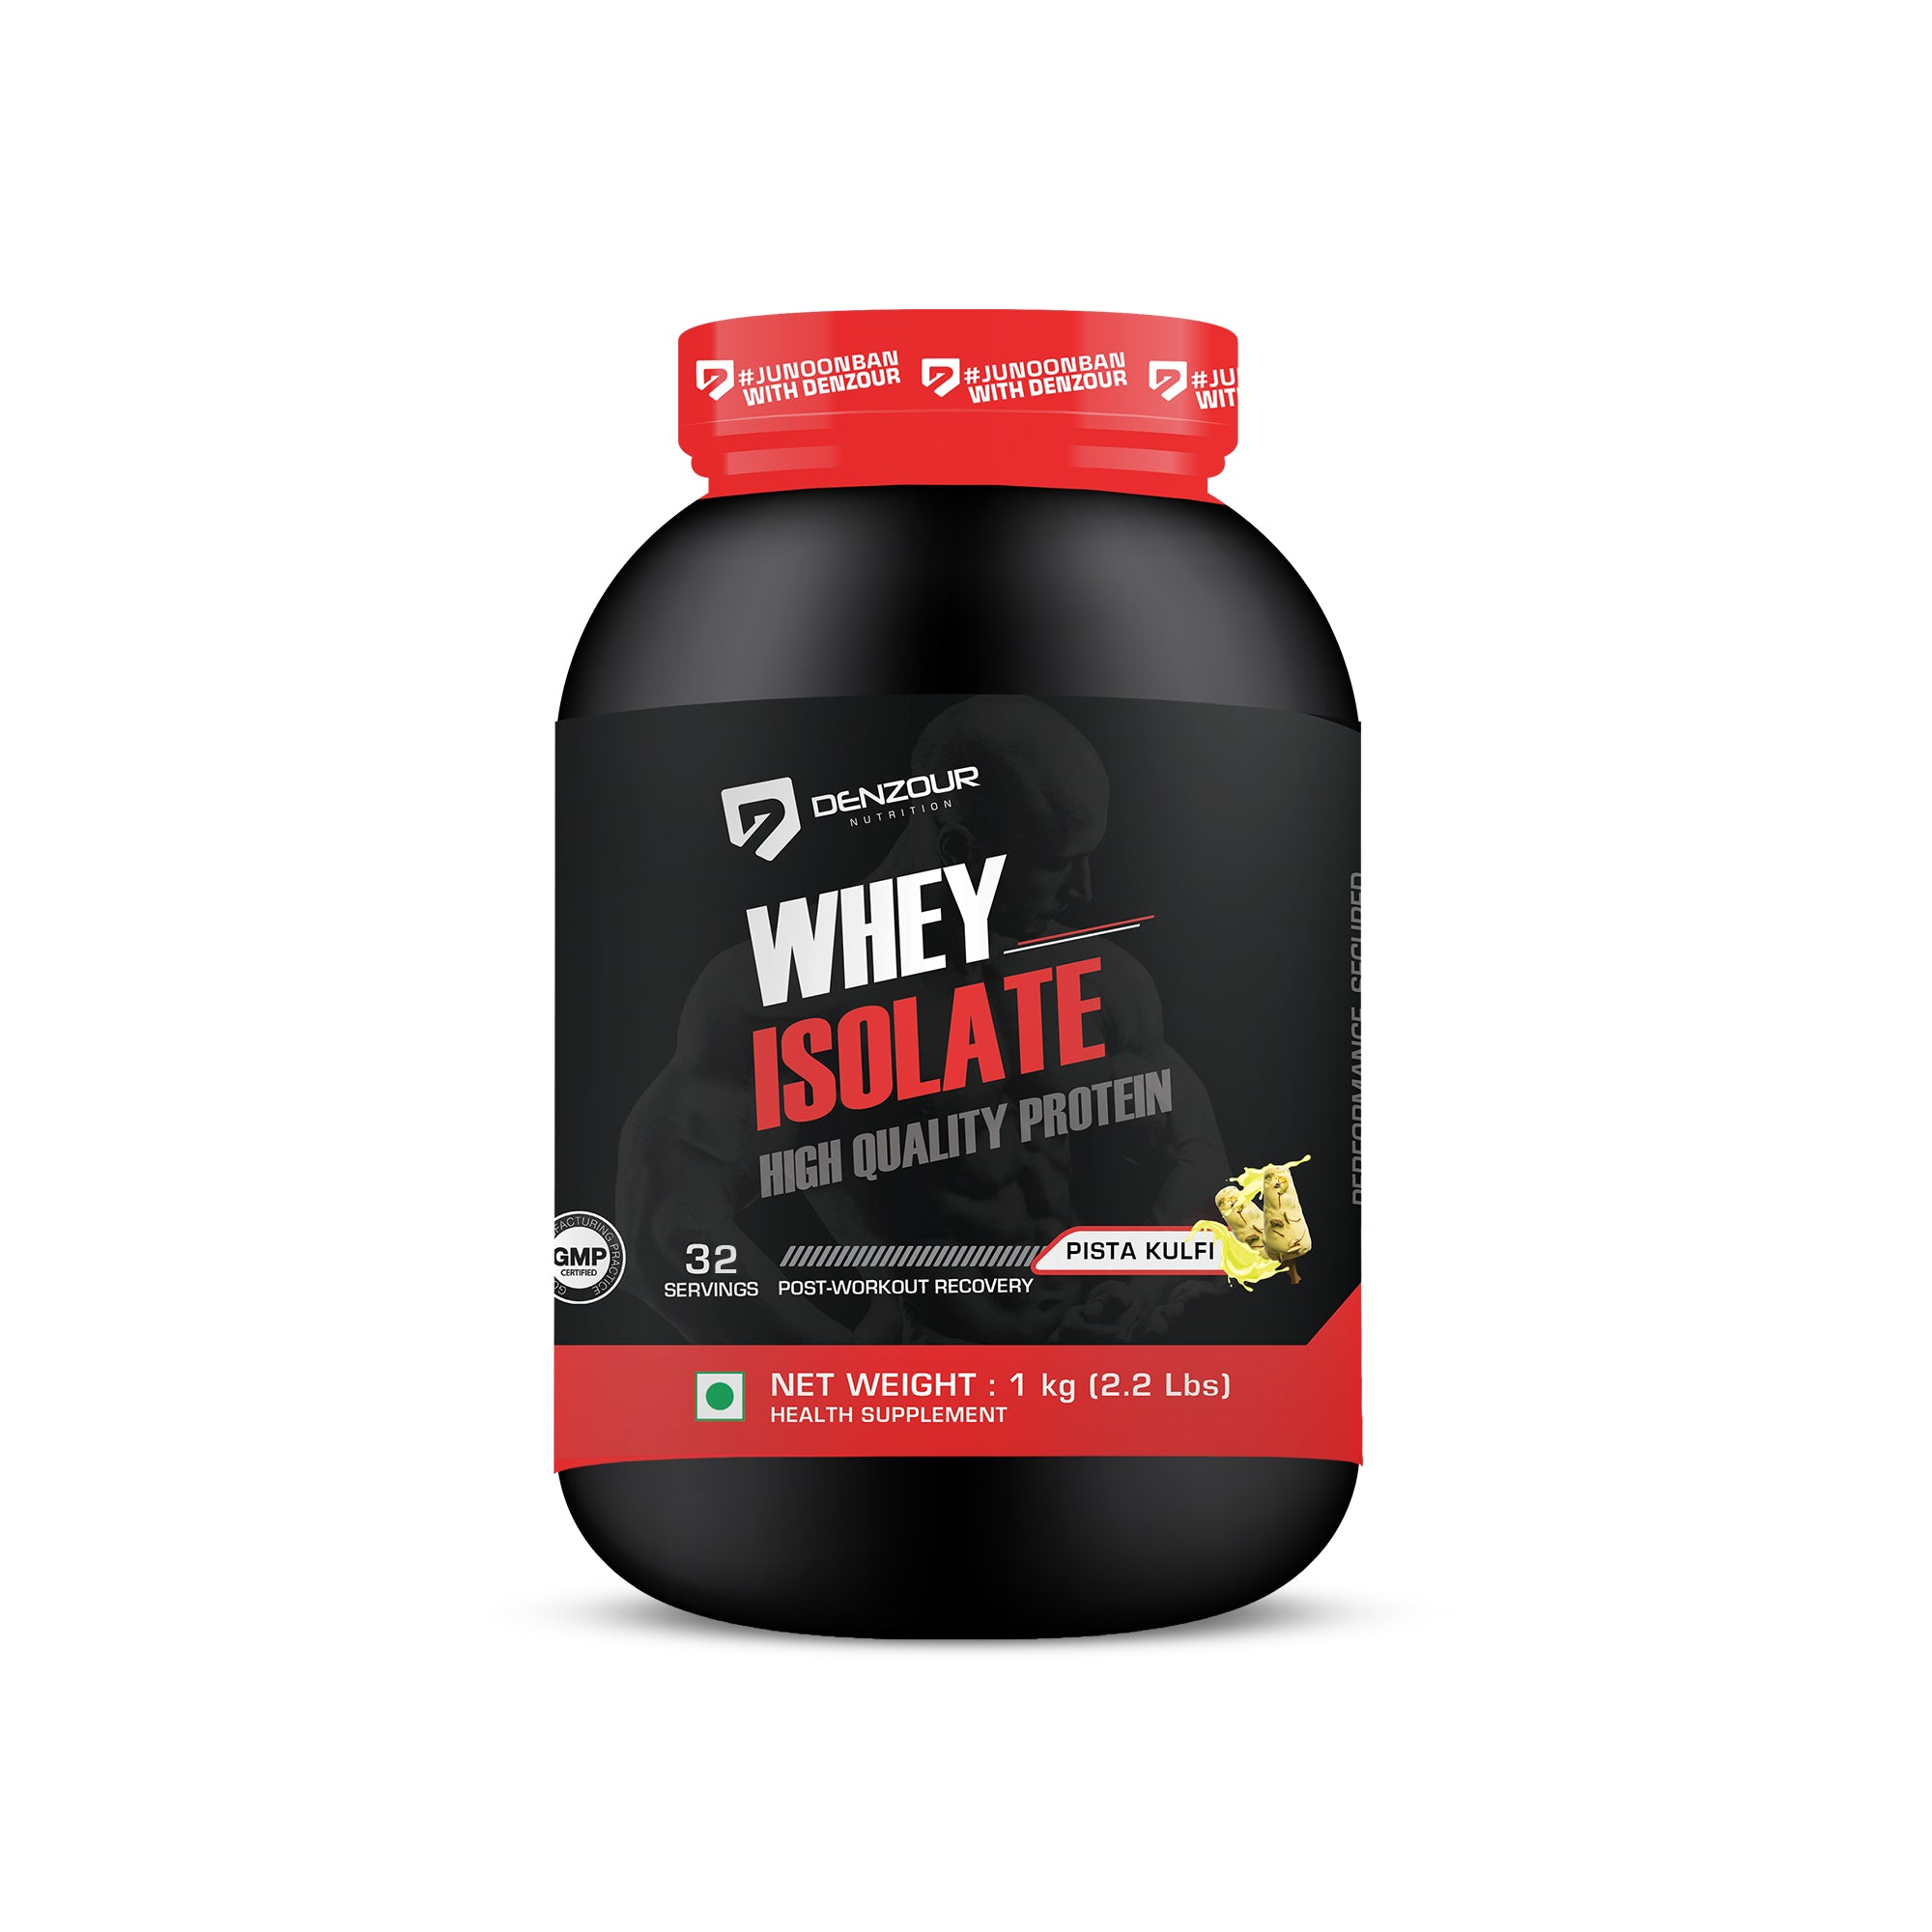 Denzour Nutrition Whey Isolate Protein Powder, 1Kg